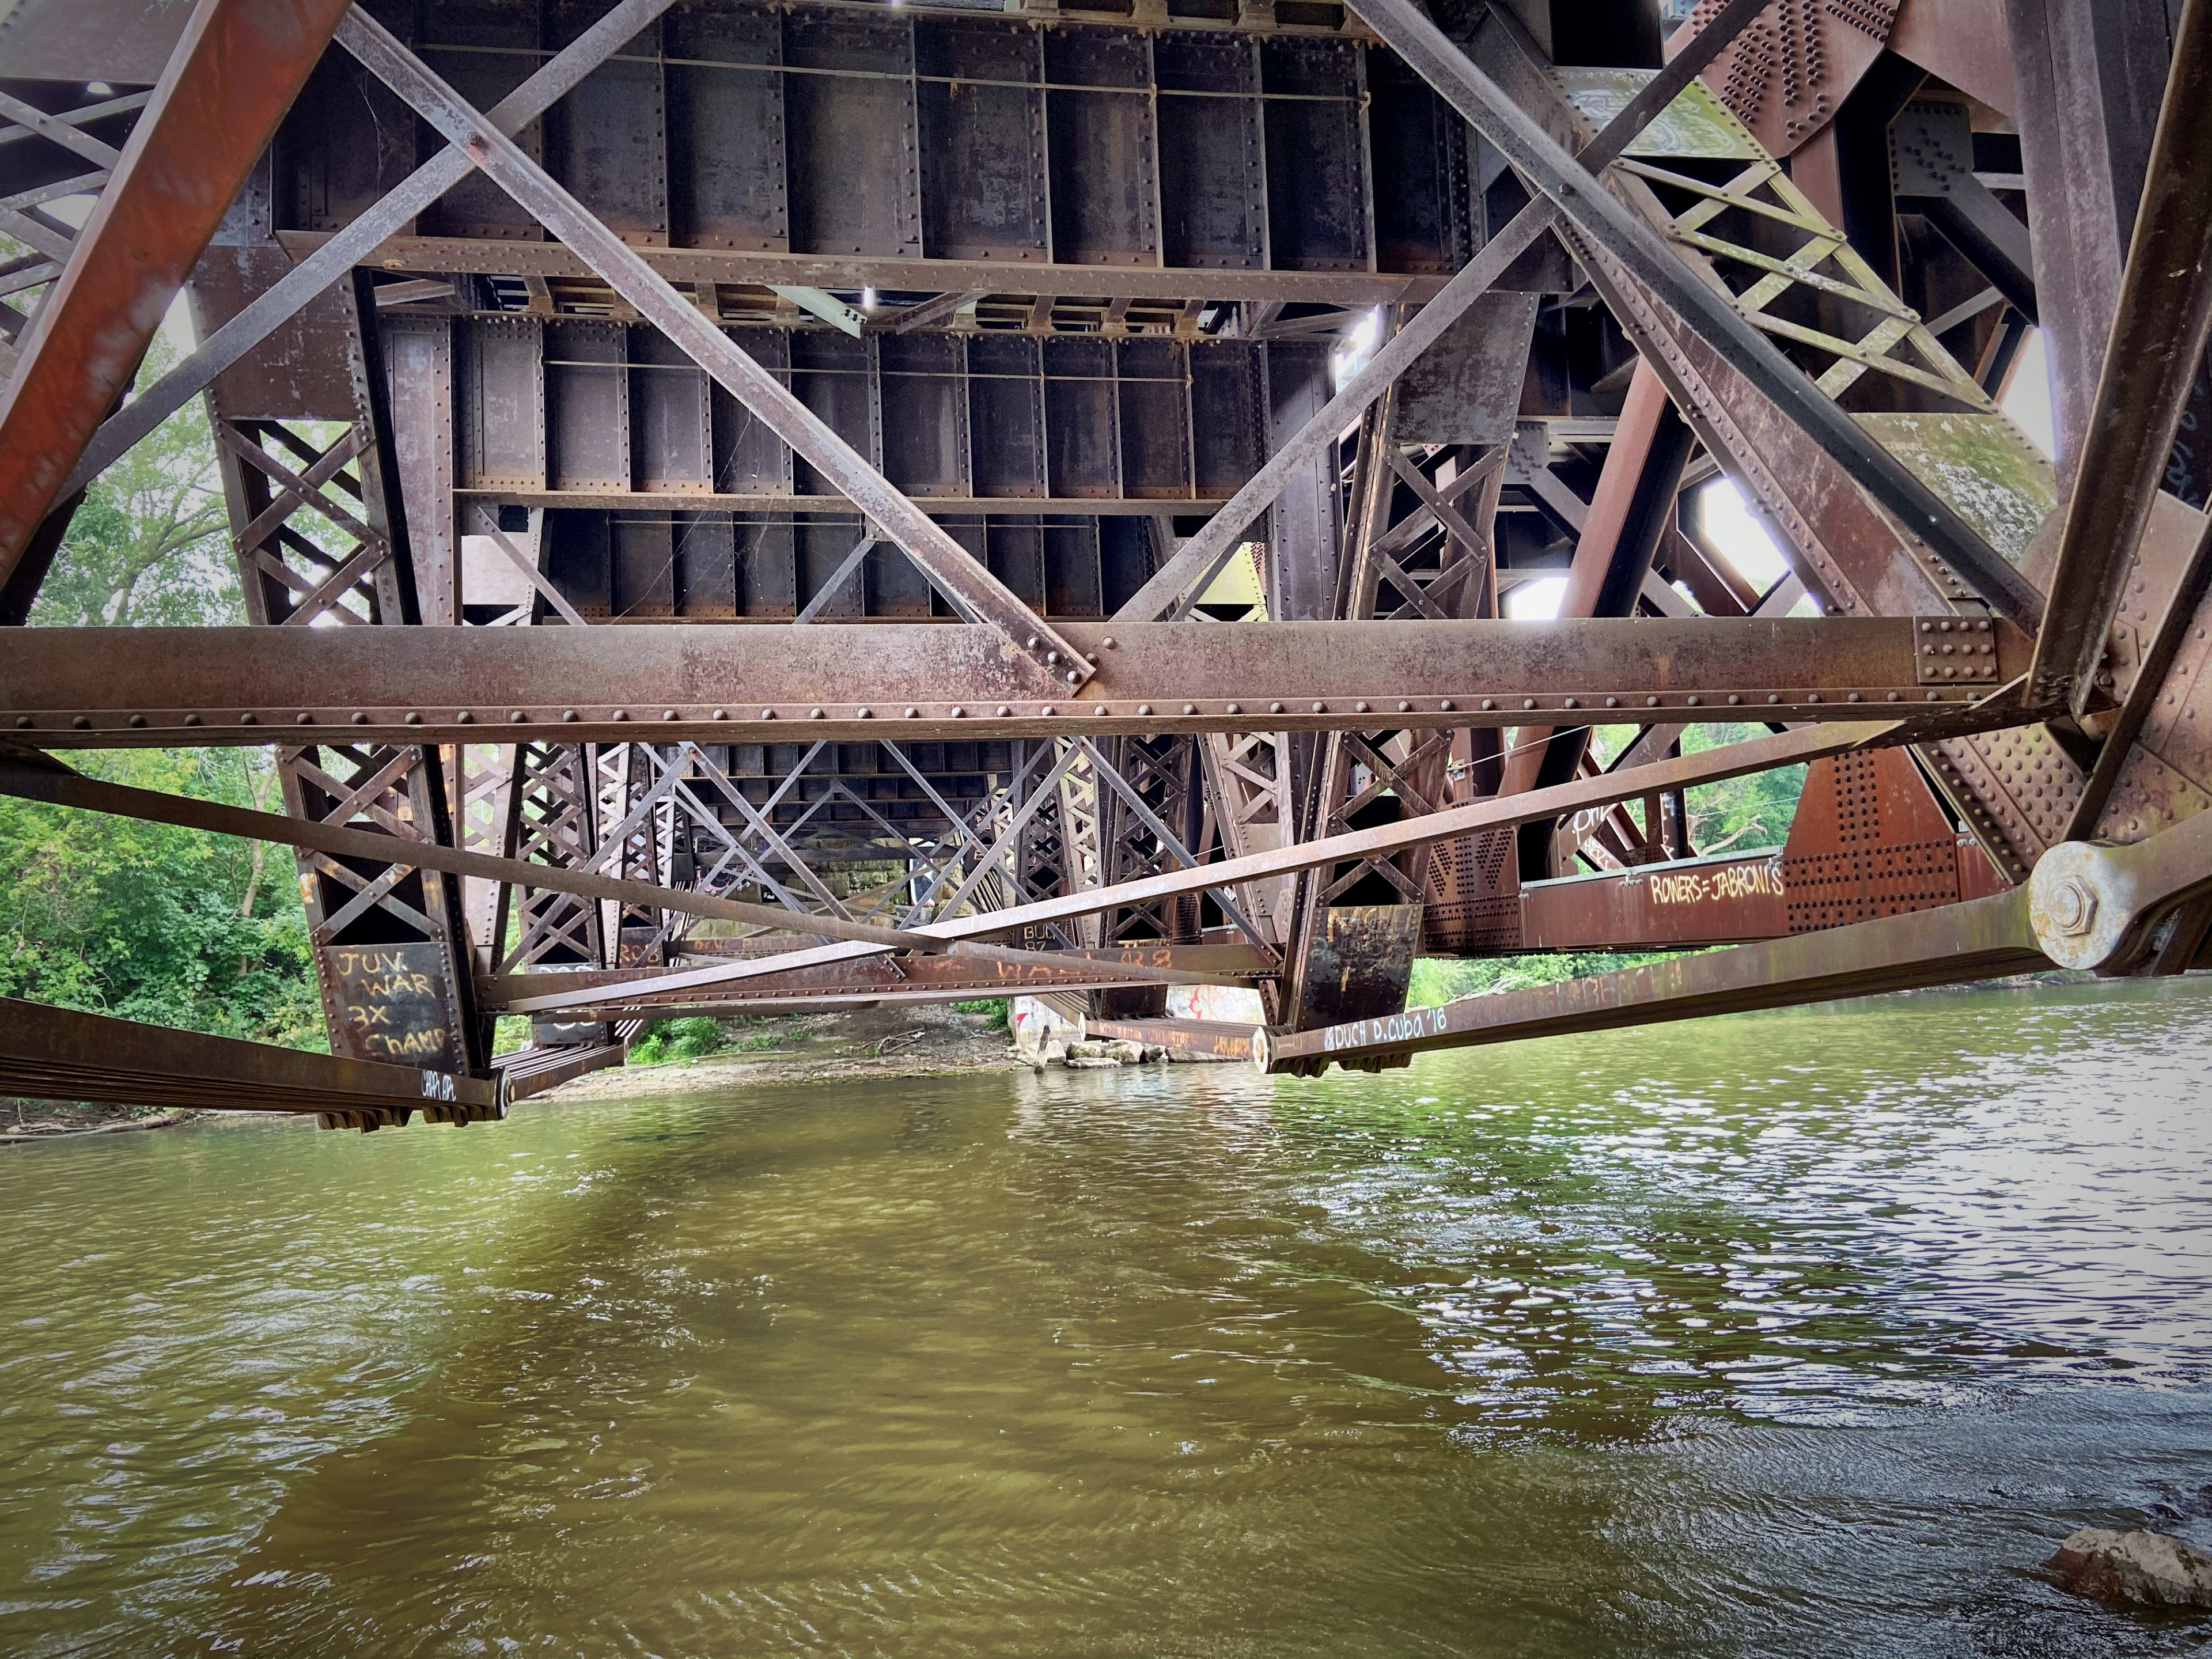 The underside of the rail bridge